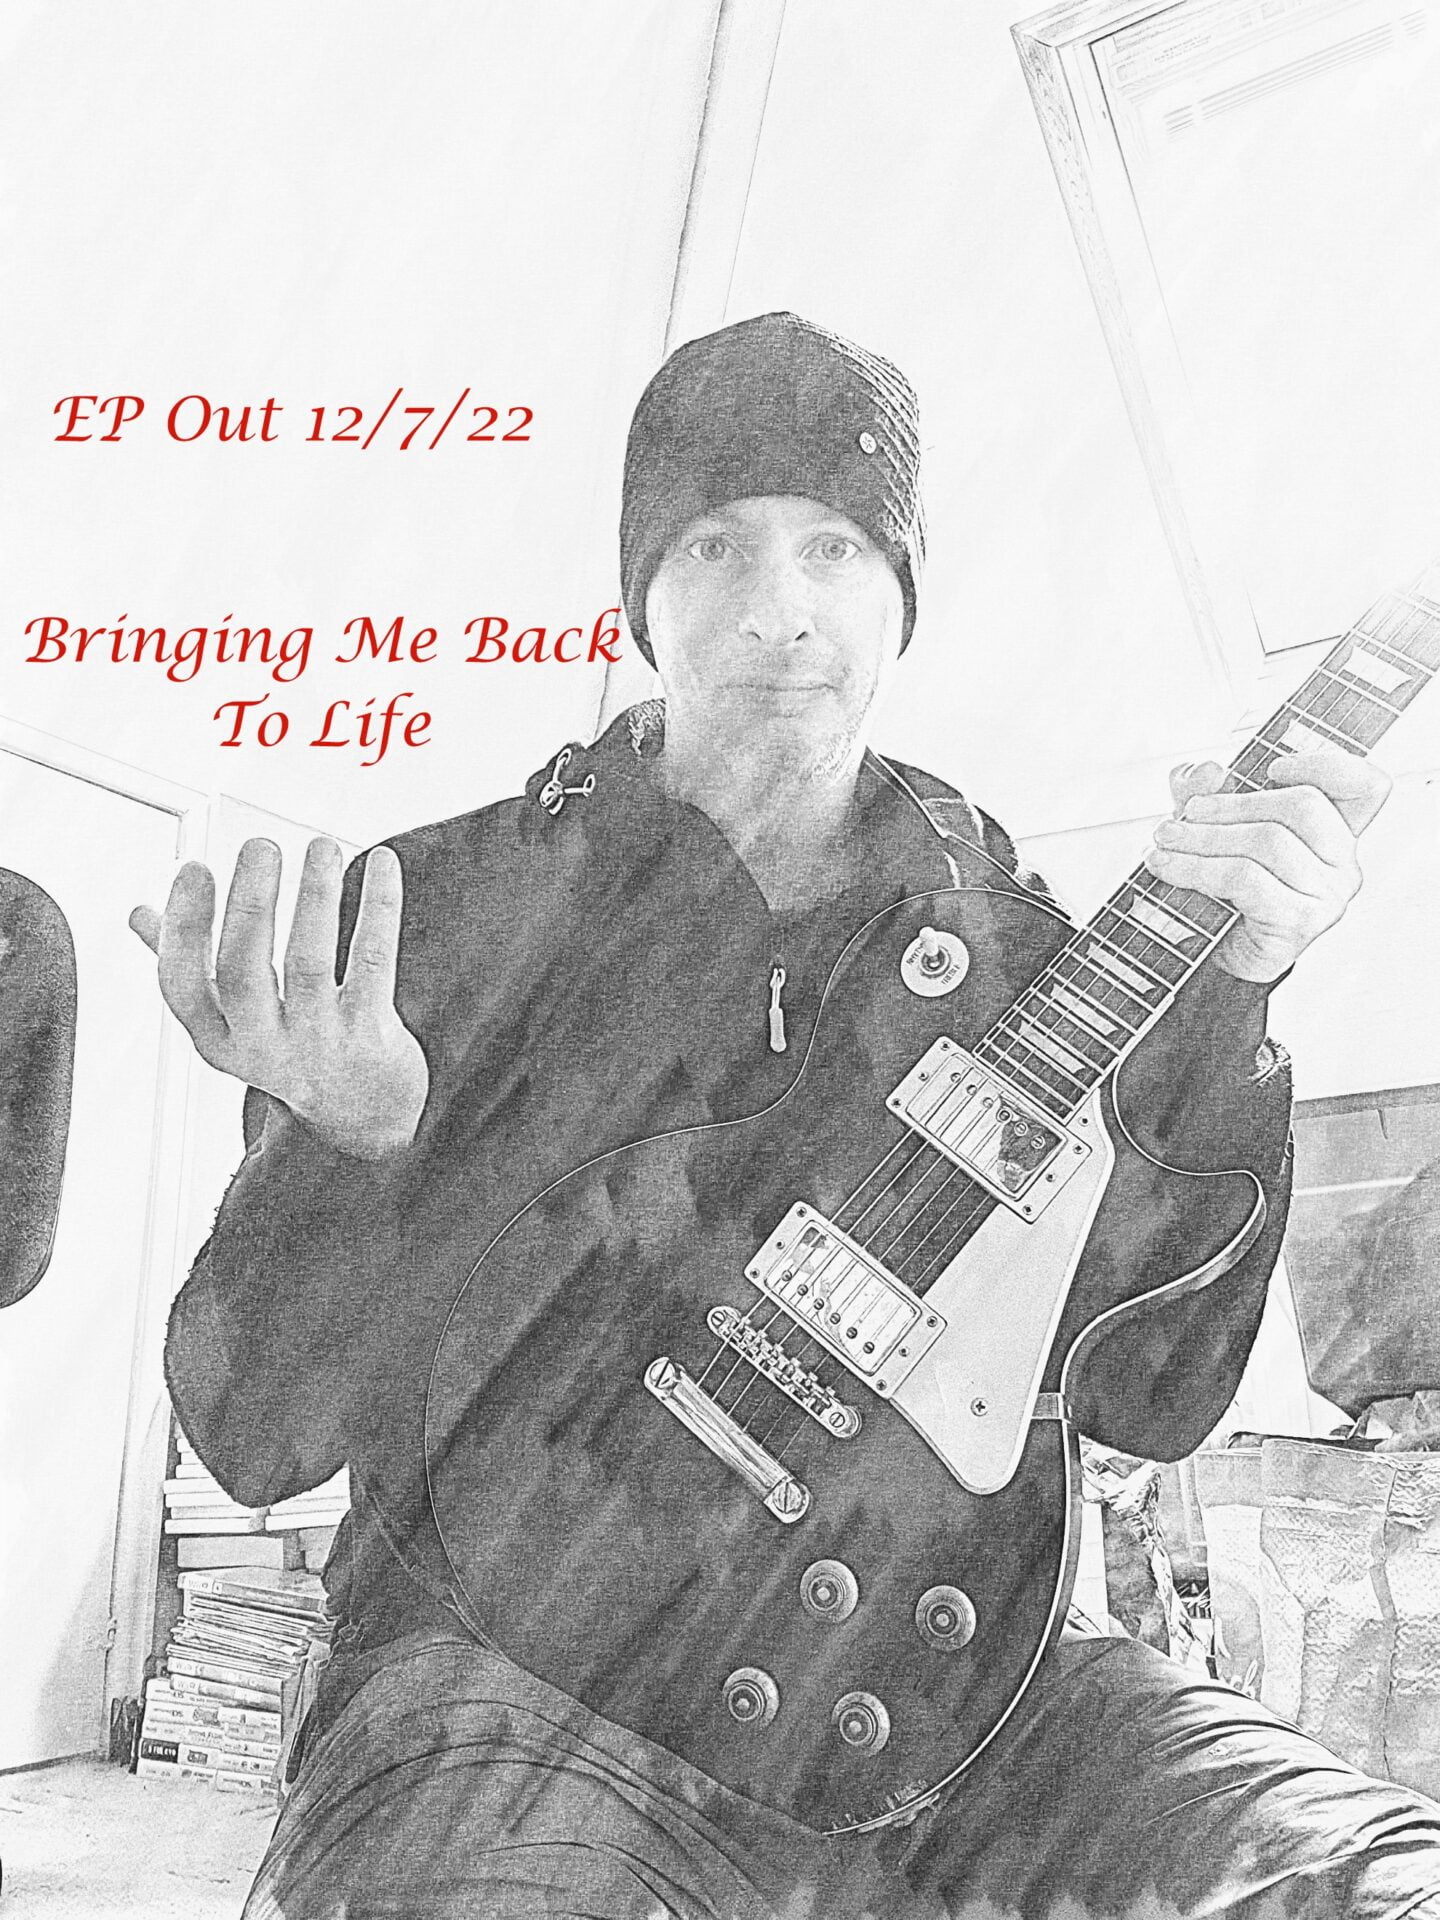 Al Buchanan releases his debut EP "Bringing Me Back To Life"